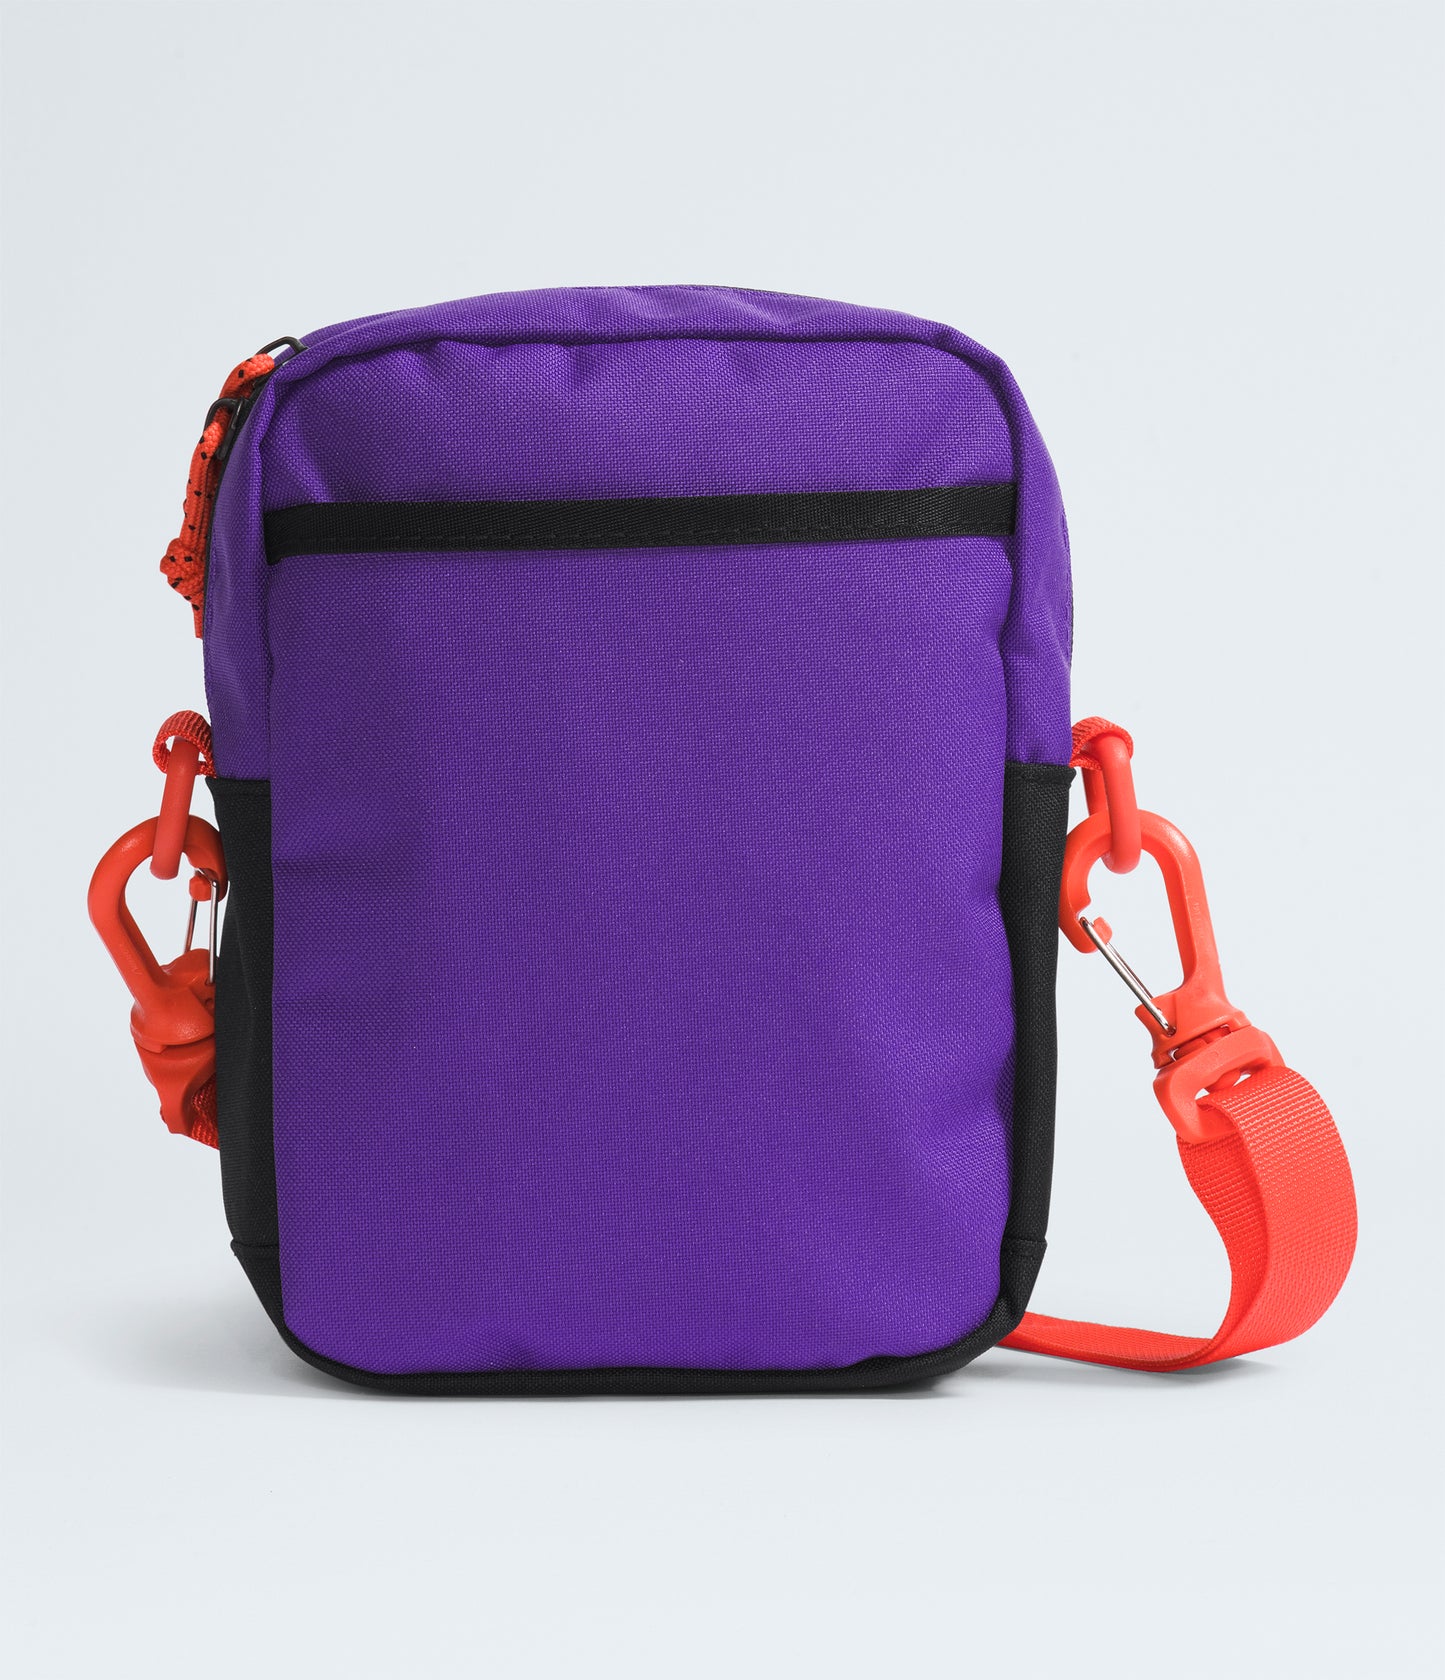 Accessories - THE NORTH FACE - Y2K Shoulder Bag - PLENTY